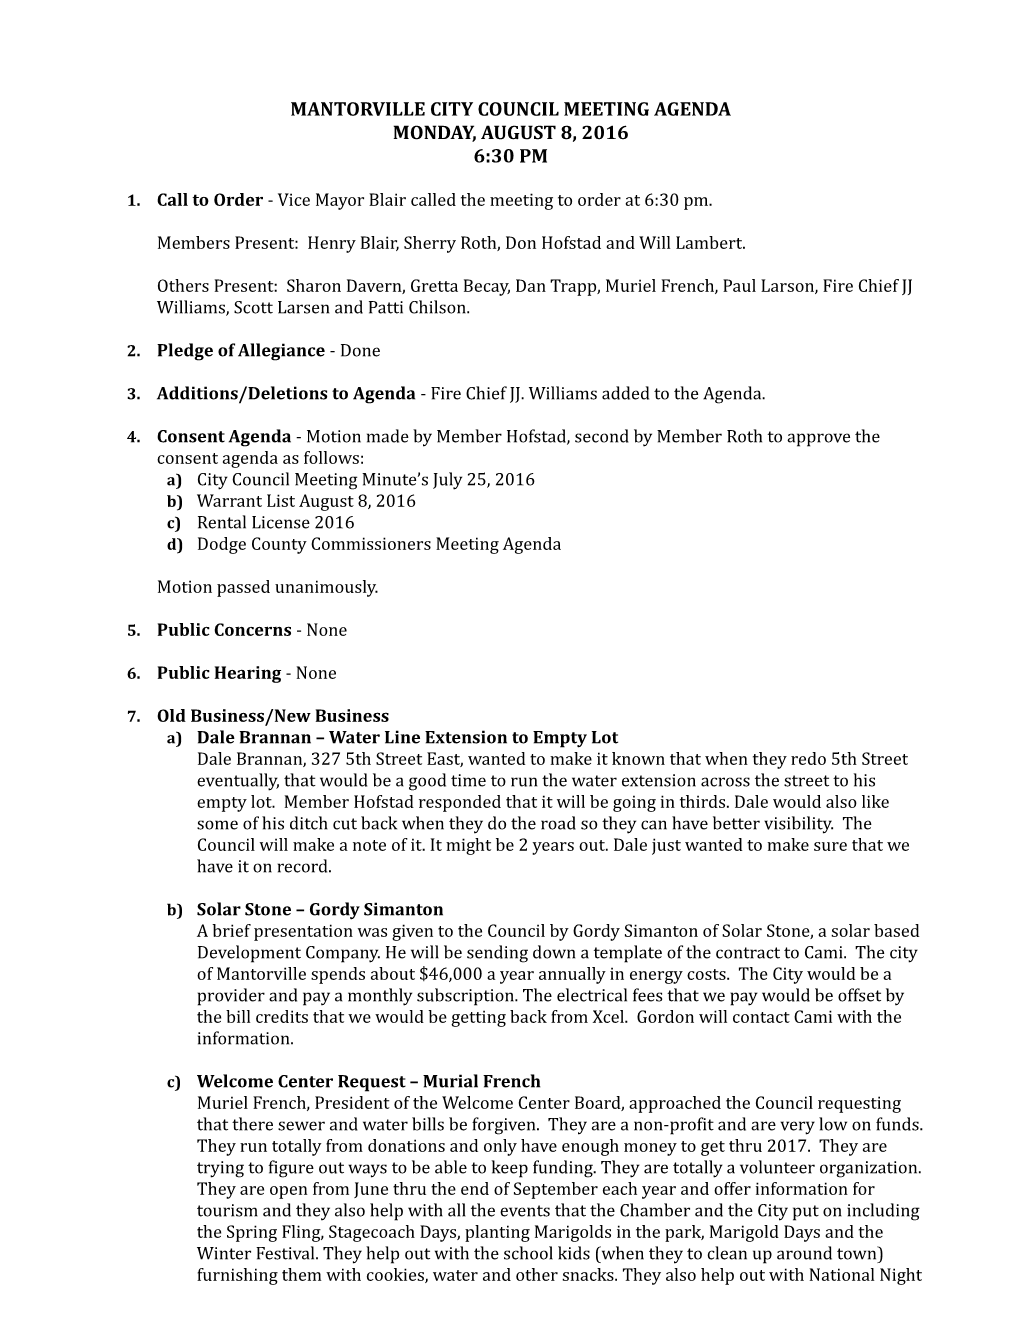 Mantorville City Council Meeting Agenda